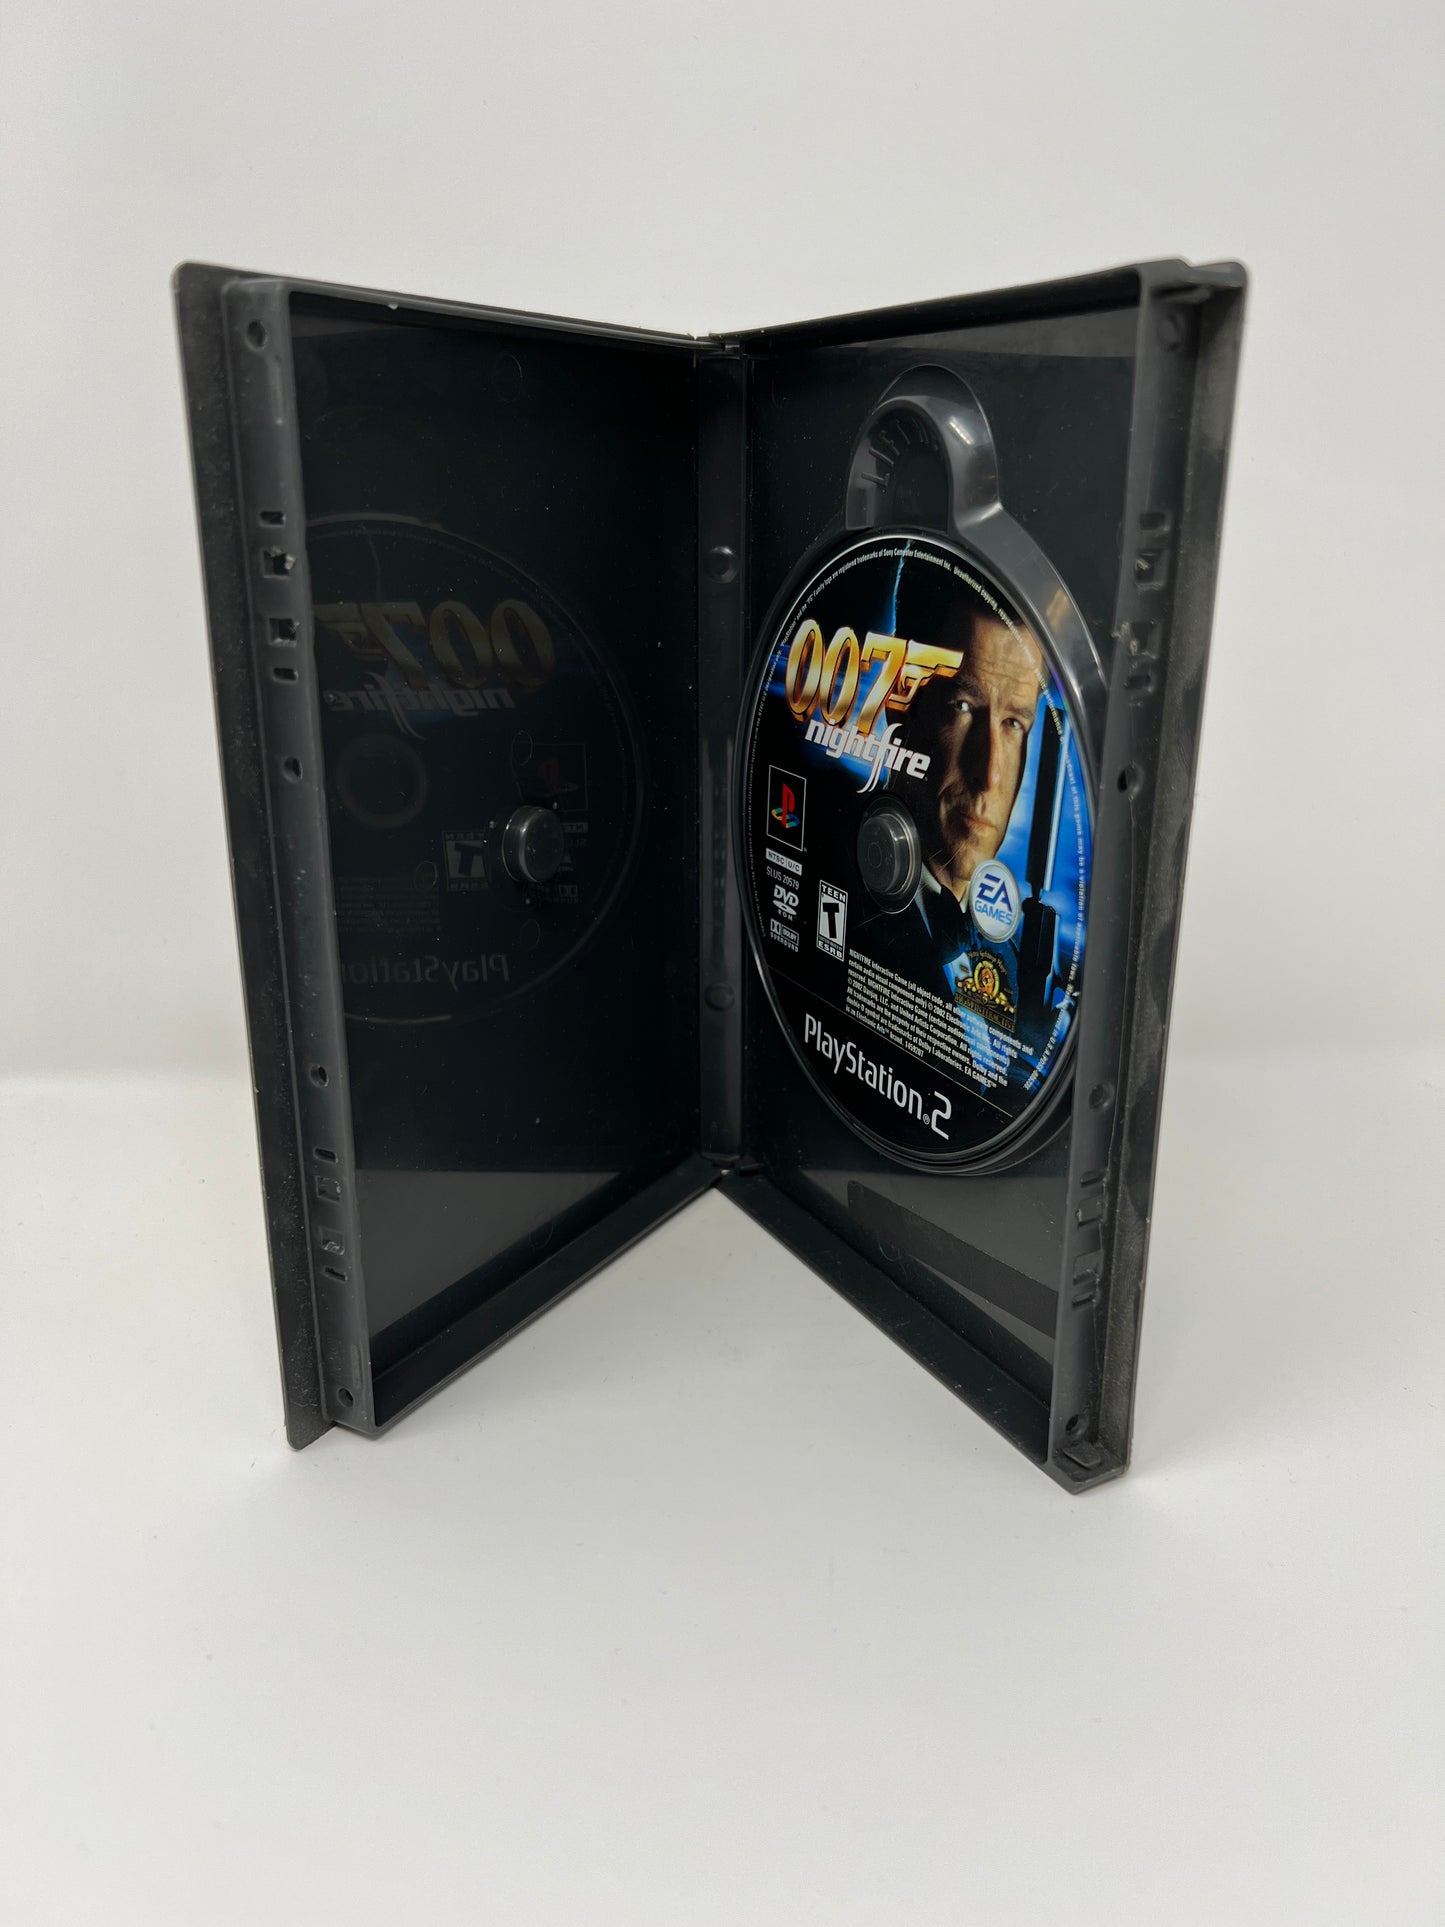 007 Nightfire - PS2 Game - Used